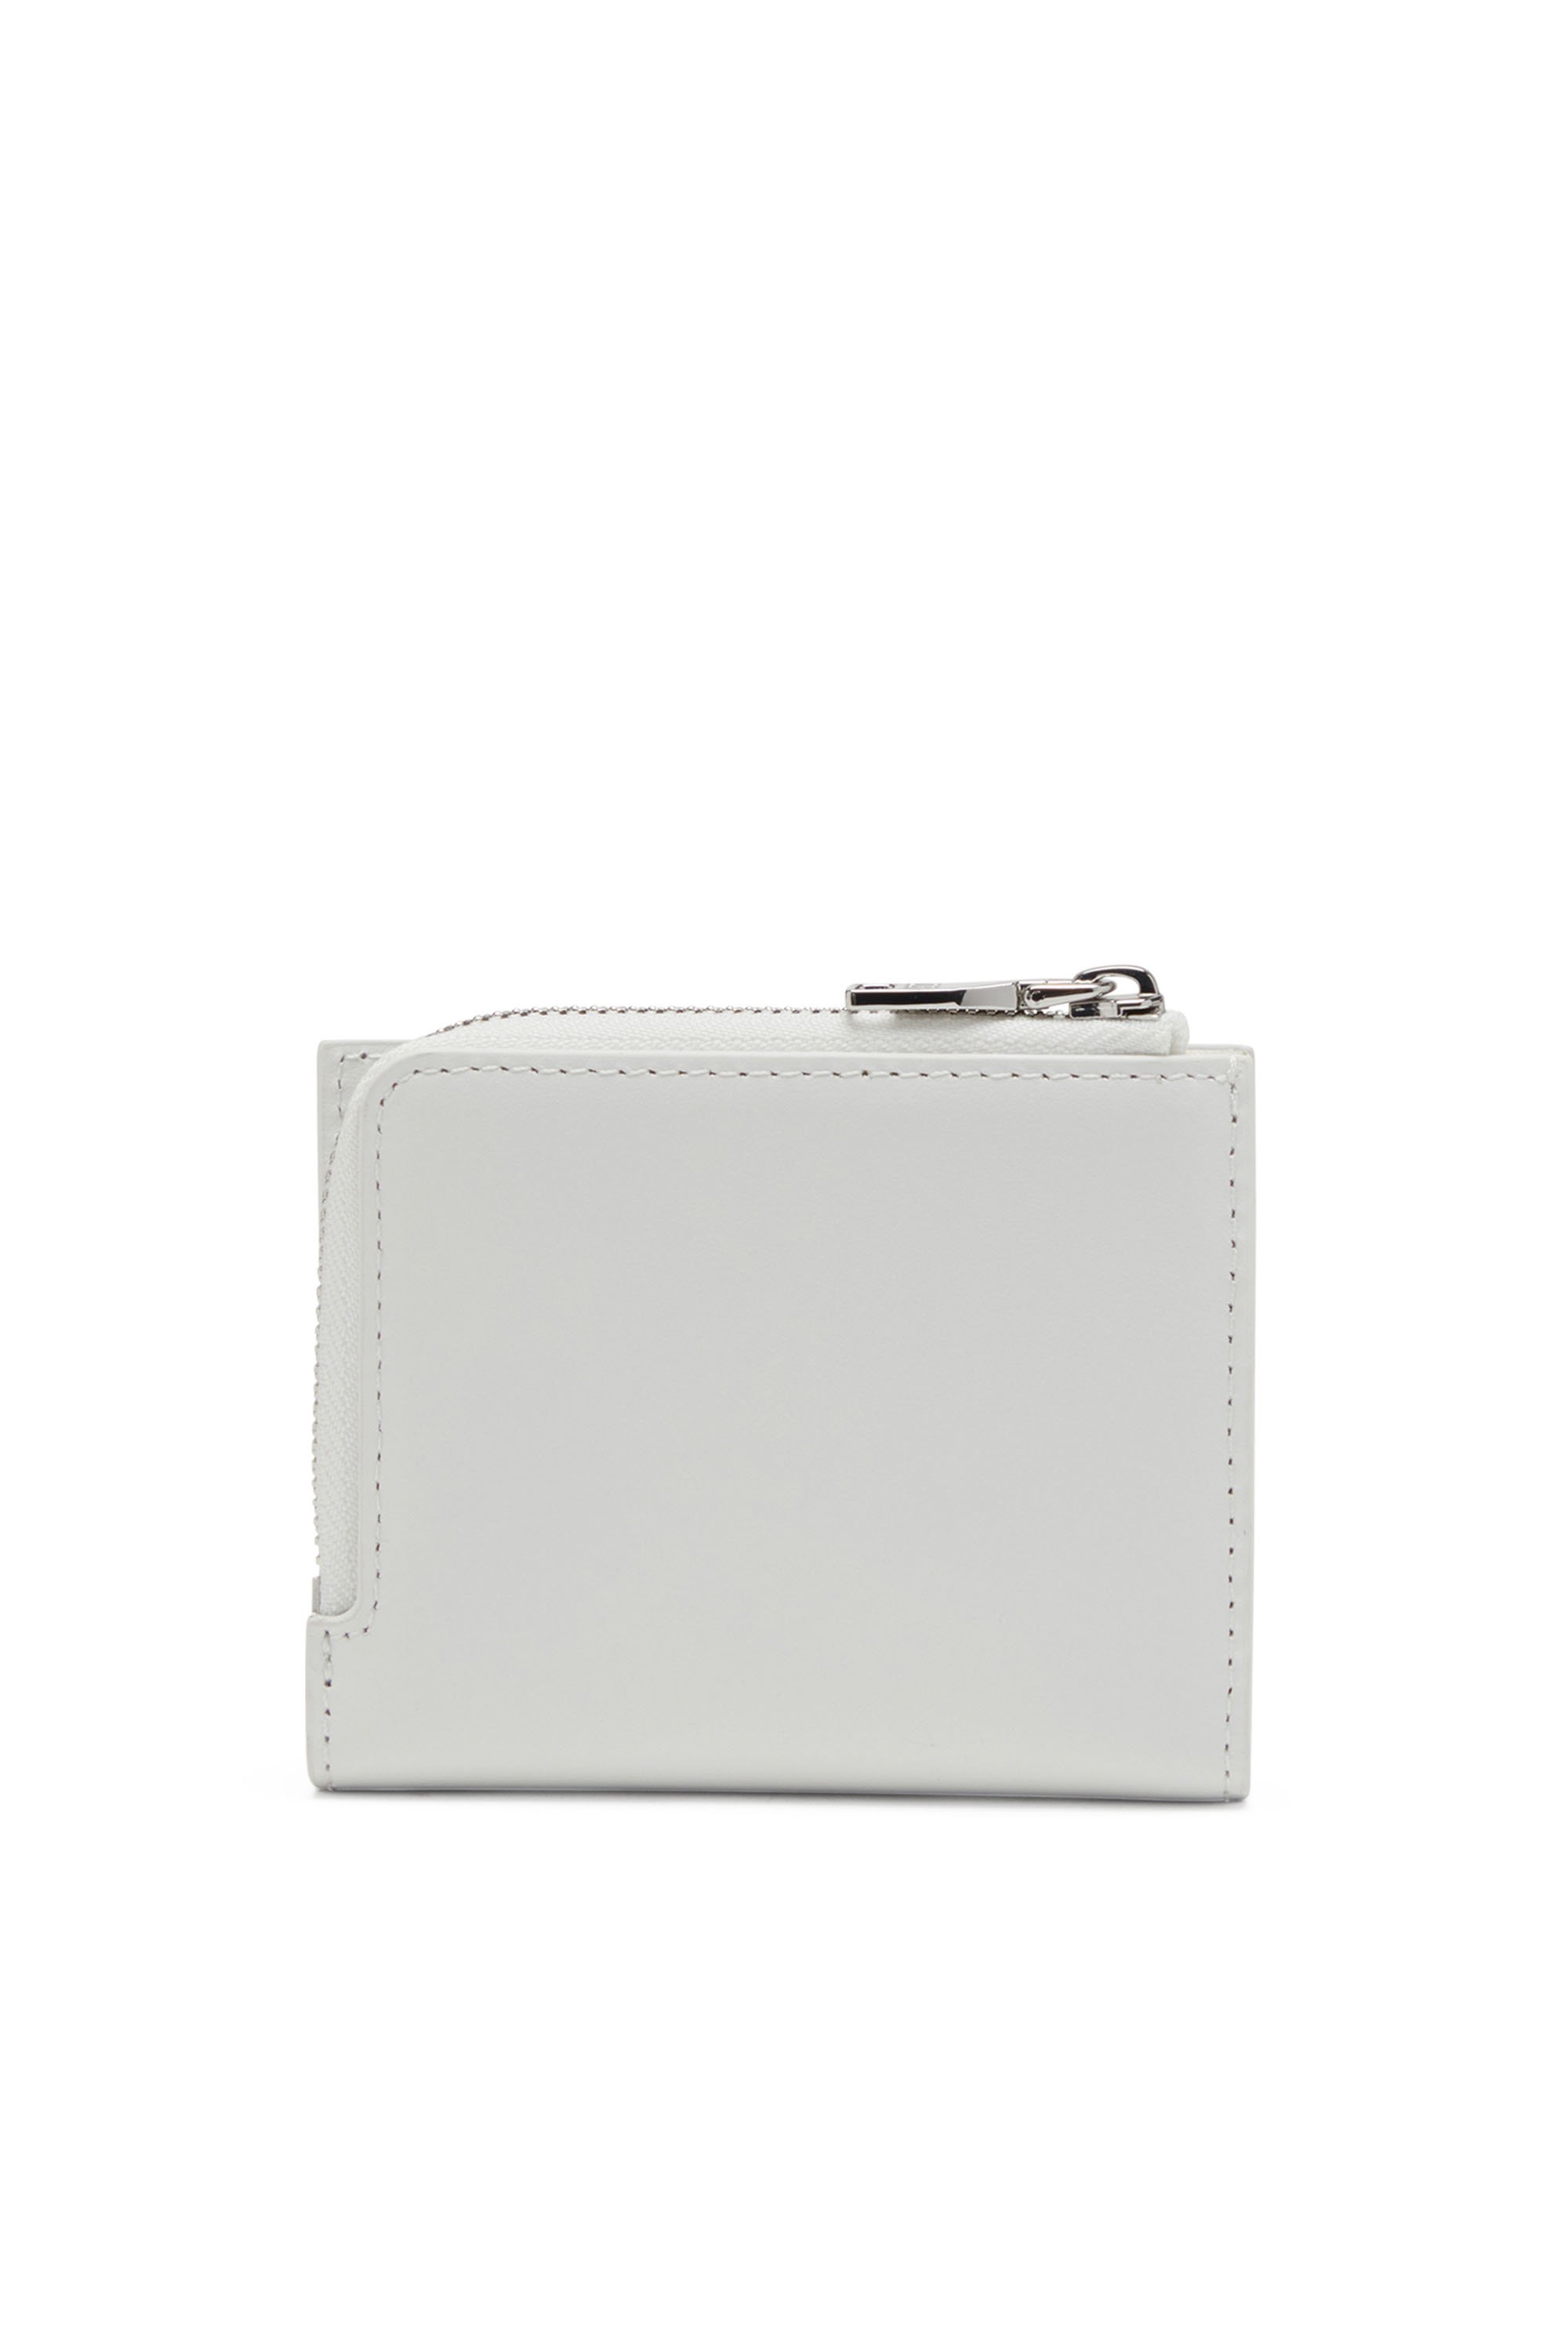 Diesel - 1DR CARD HOLDER ZIP L, Female Bi-fold card holder in nappa leather in White - Image 2